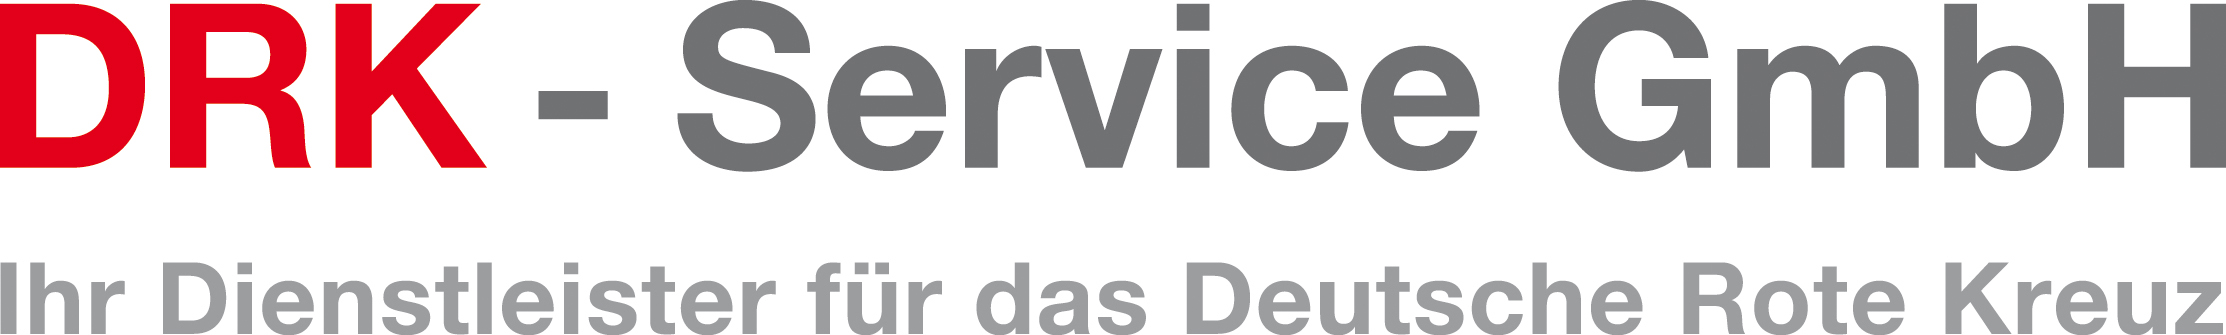 DRK-Service GmbH